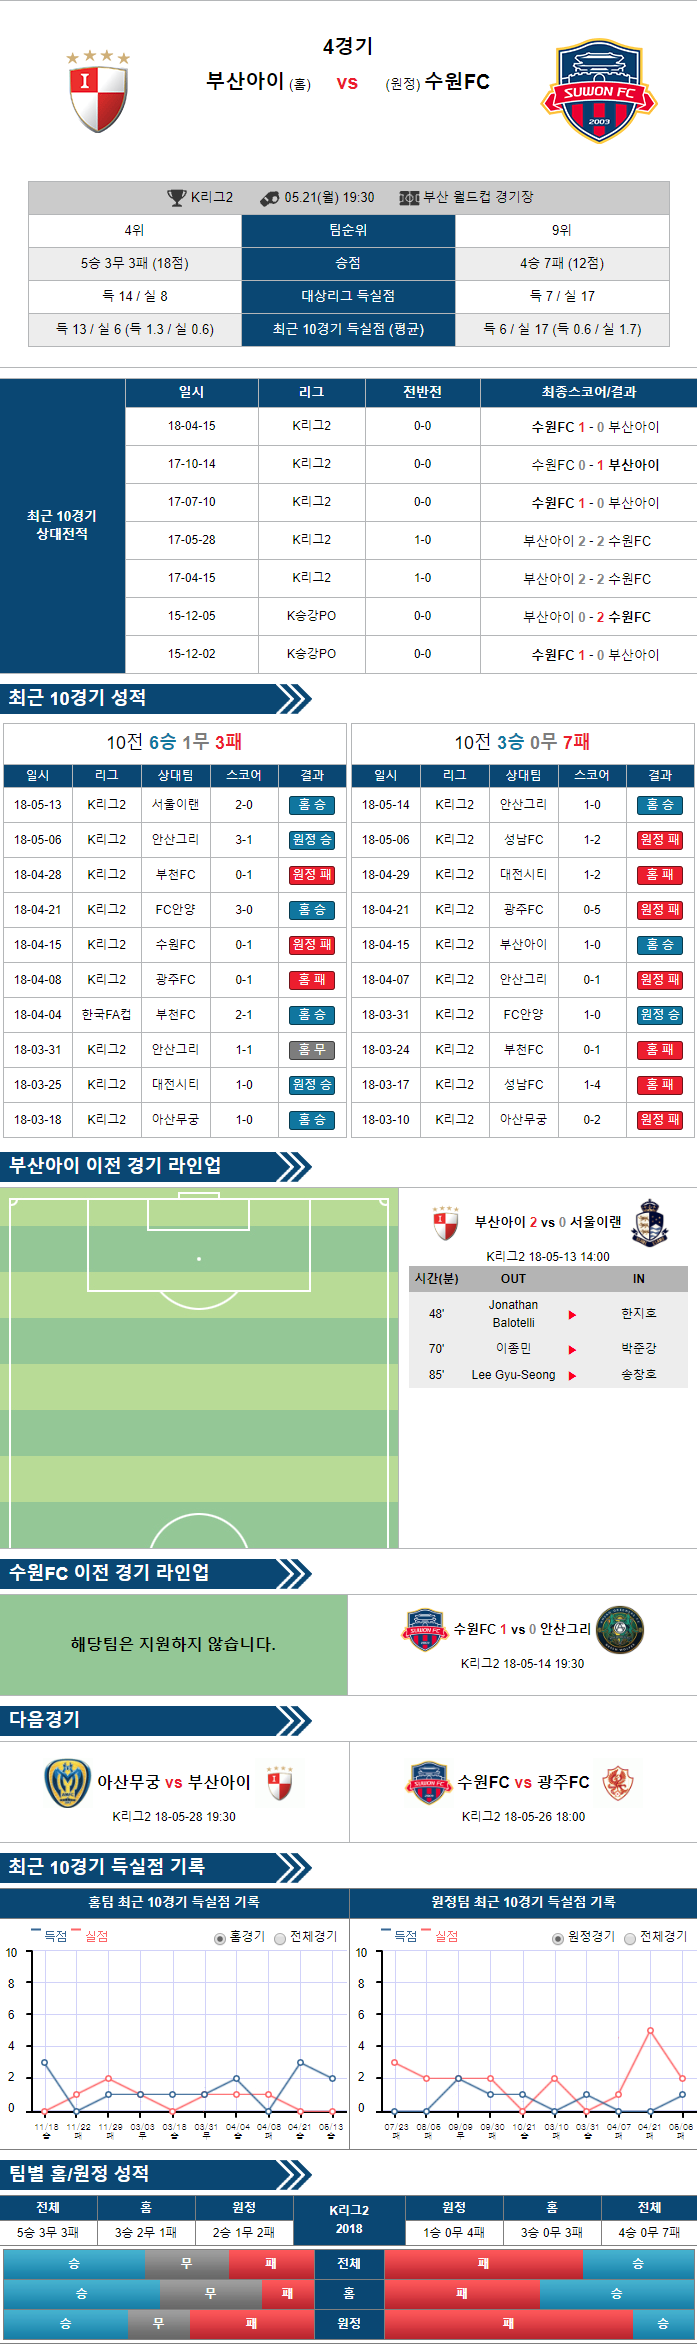 5-21 [K리그챌린지] 19:30 축구분석 부산 아이파크 vs 수원 FC